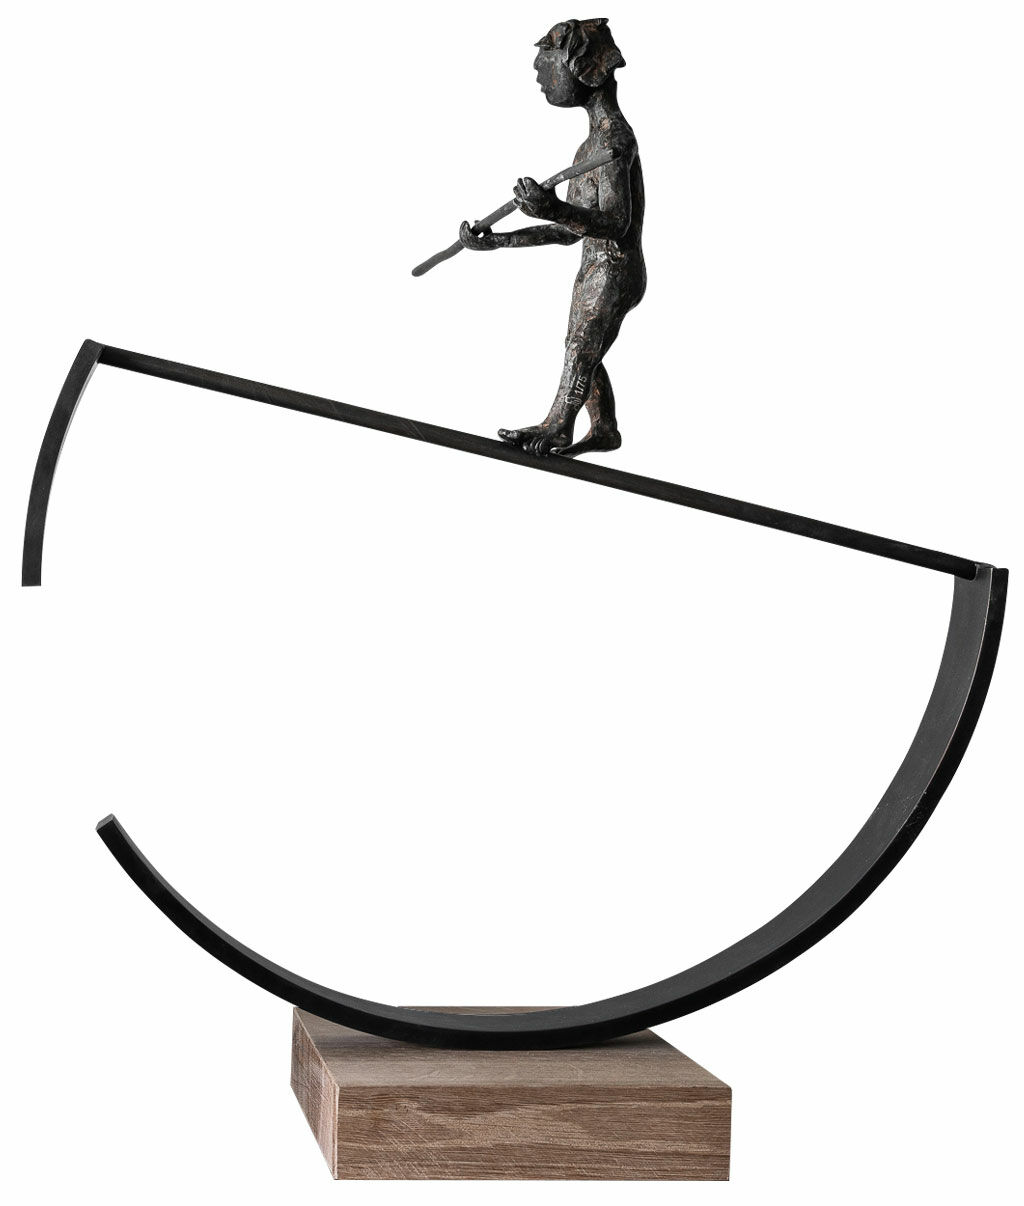 Sculpture "Balance", bronze by Freddy de Waele